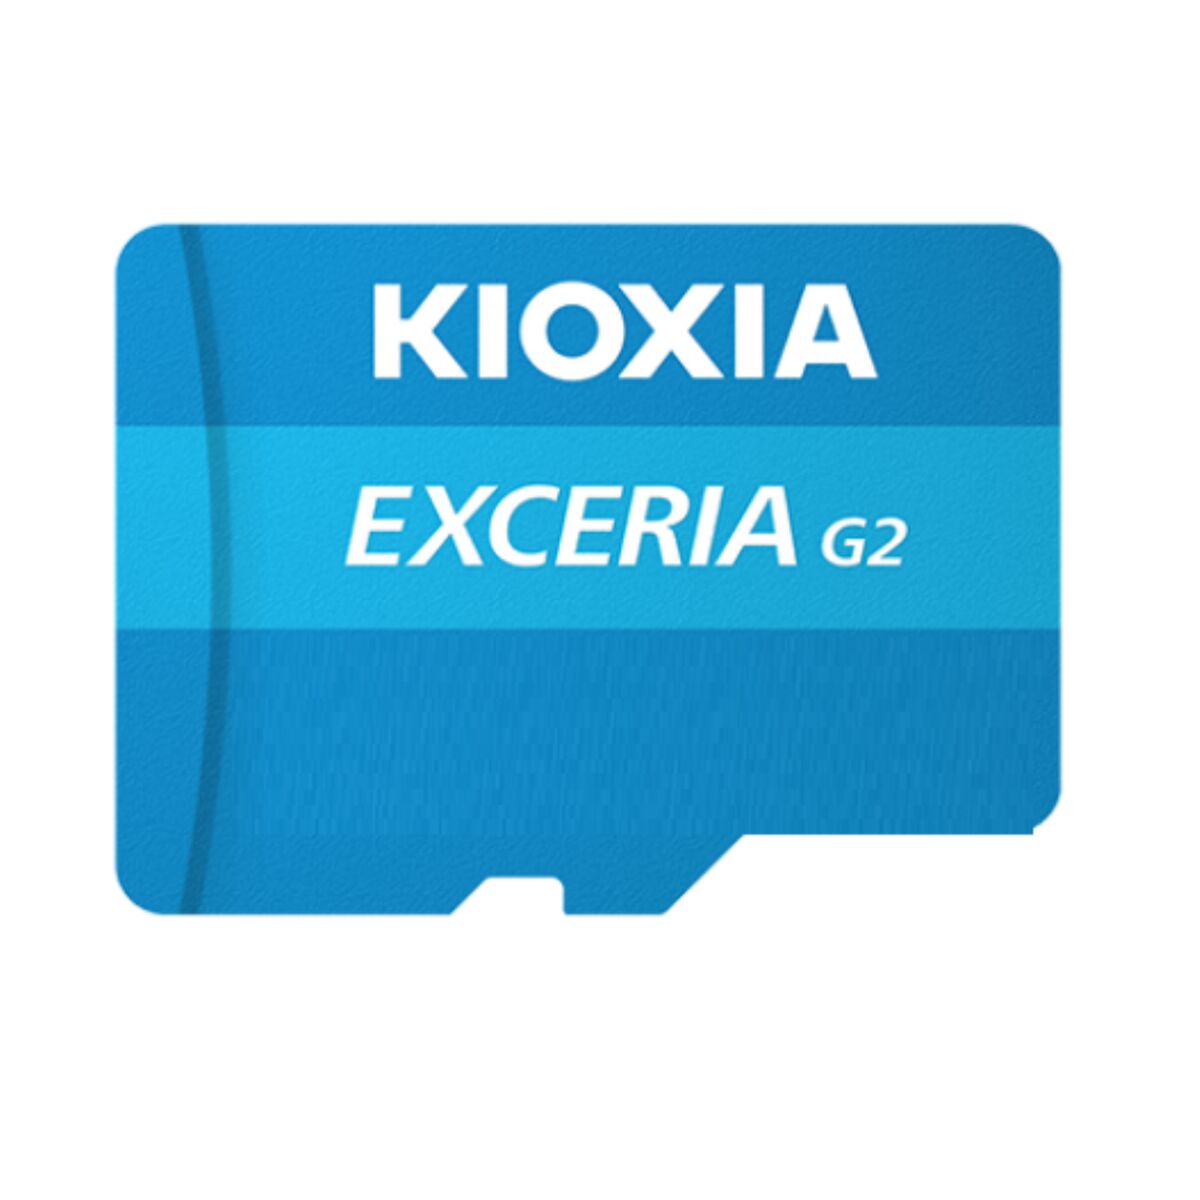 Micro SD Card Kioxia EXCERIA G2, Kioxia, Computing, Data storage, micro-sd-card-kioxia-exceria-g2, Brand_Kioxia, category-reference-2609, category-reference-2803, category-reference-2813, category-reference-t-19685, category-reference-t-19909, category-reference-t-21355, category-reference-t-25632, computers / components, Condition_NEW, Price_20 - 50, Teleworking, RiotNook